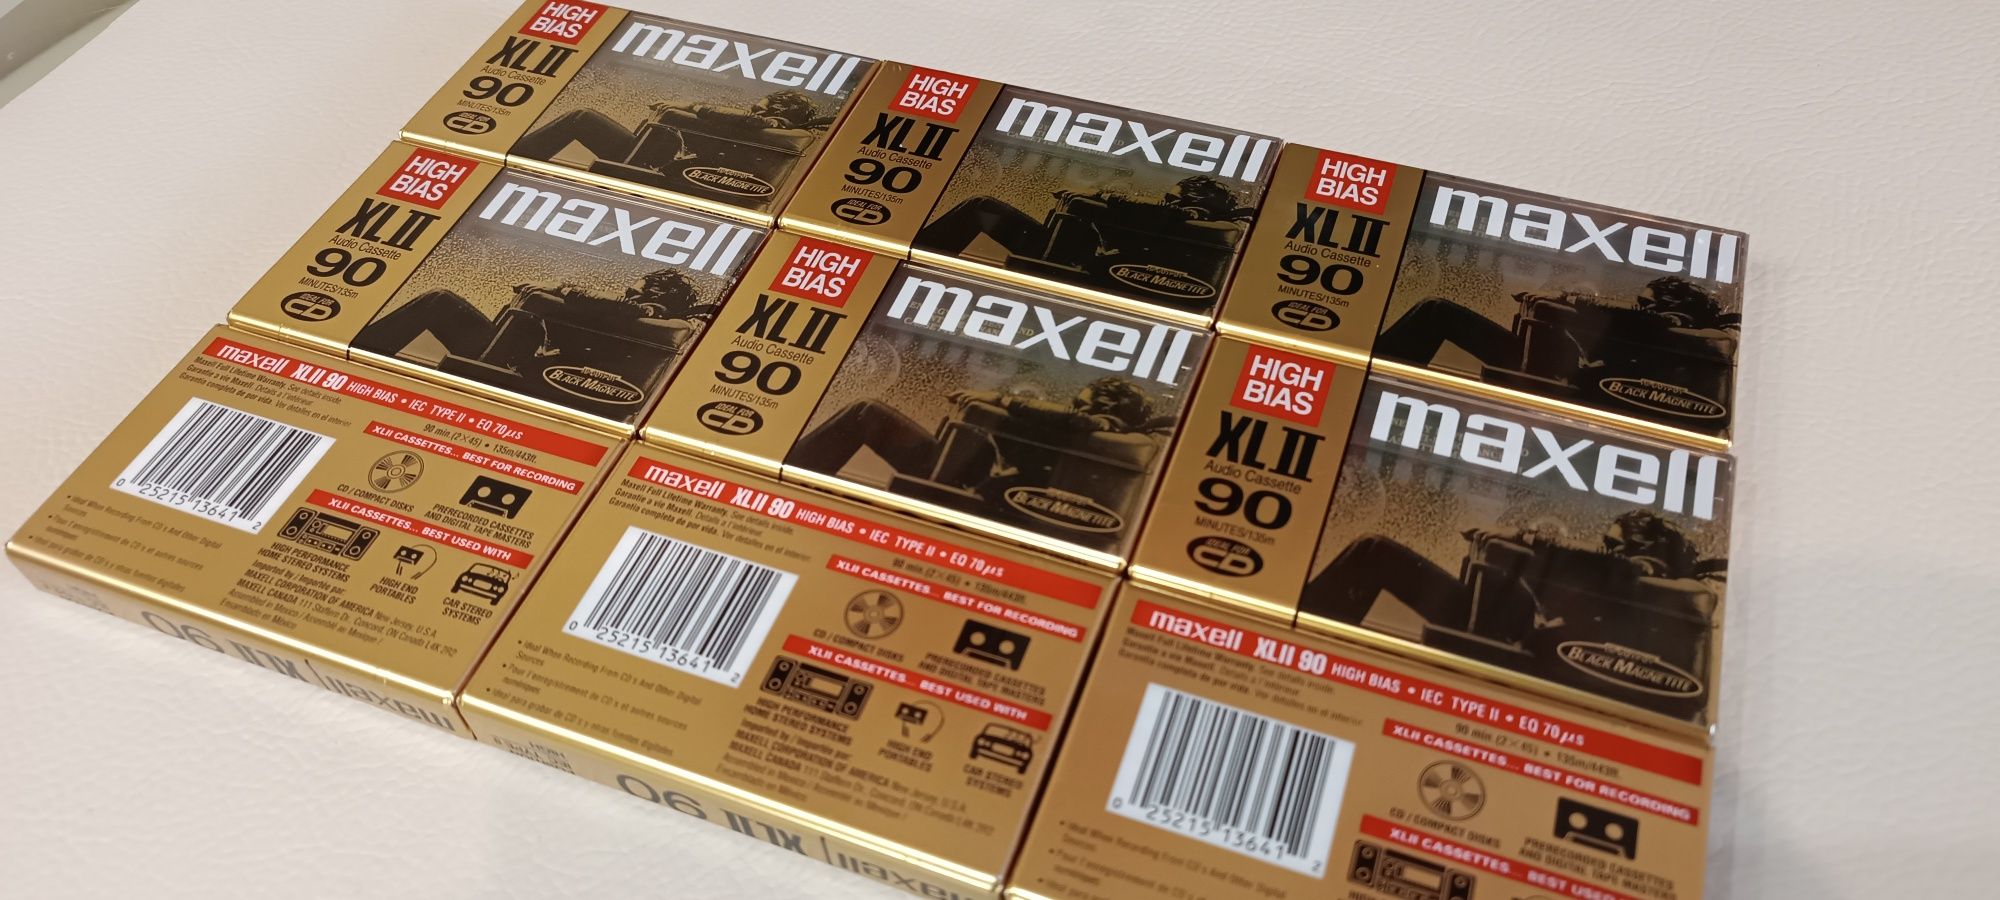 Кассеты Maxell XL-ll 90 новые запечатанные.